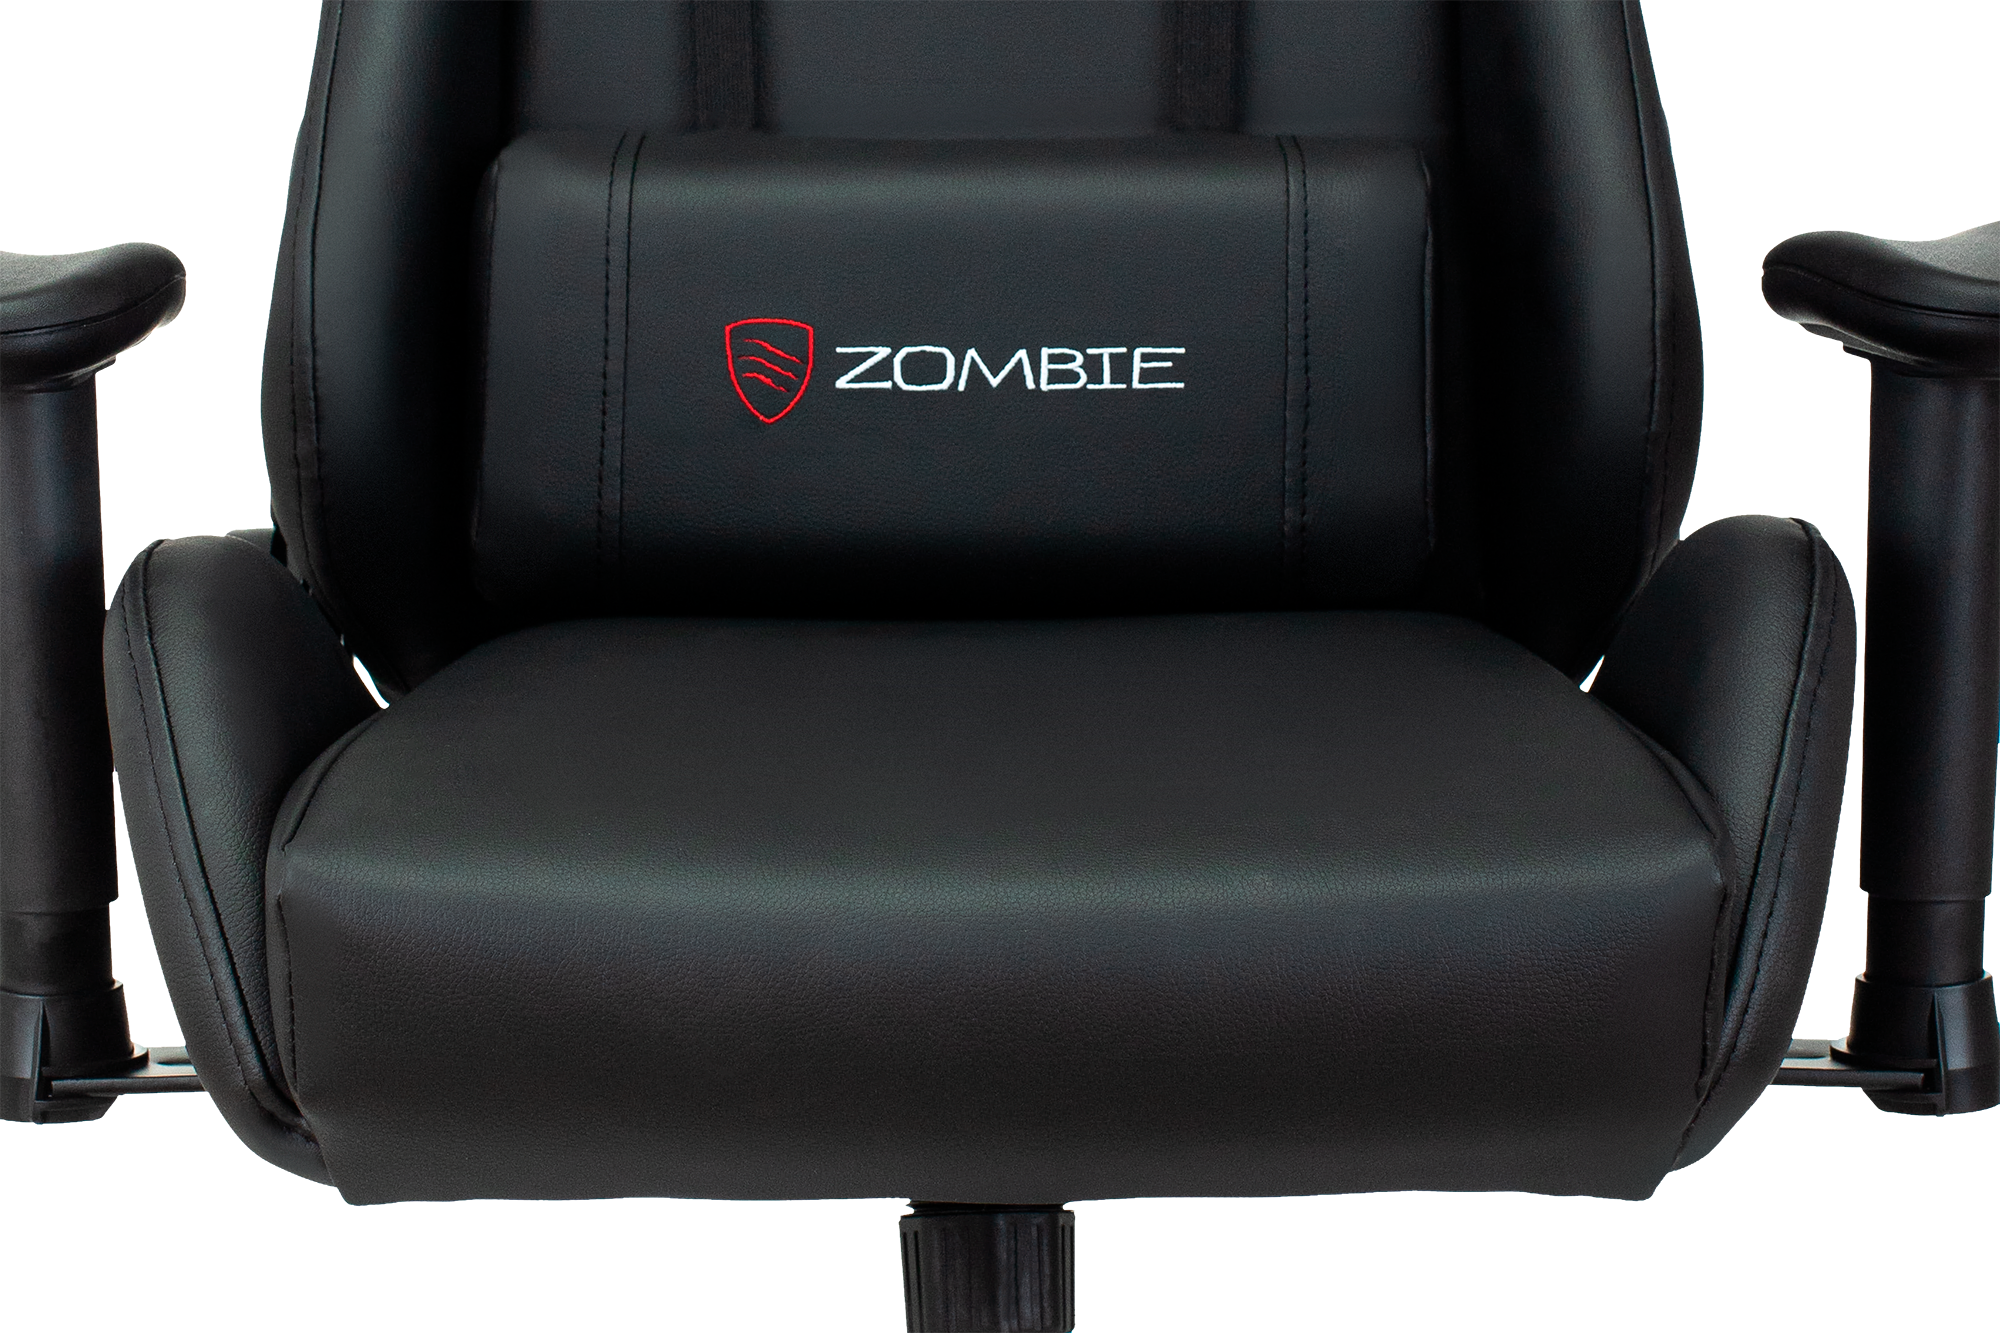 Кресло игровое zombie game 17 черный текстиль эко кожа крестовина пластик zombie game 17 carbo